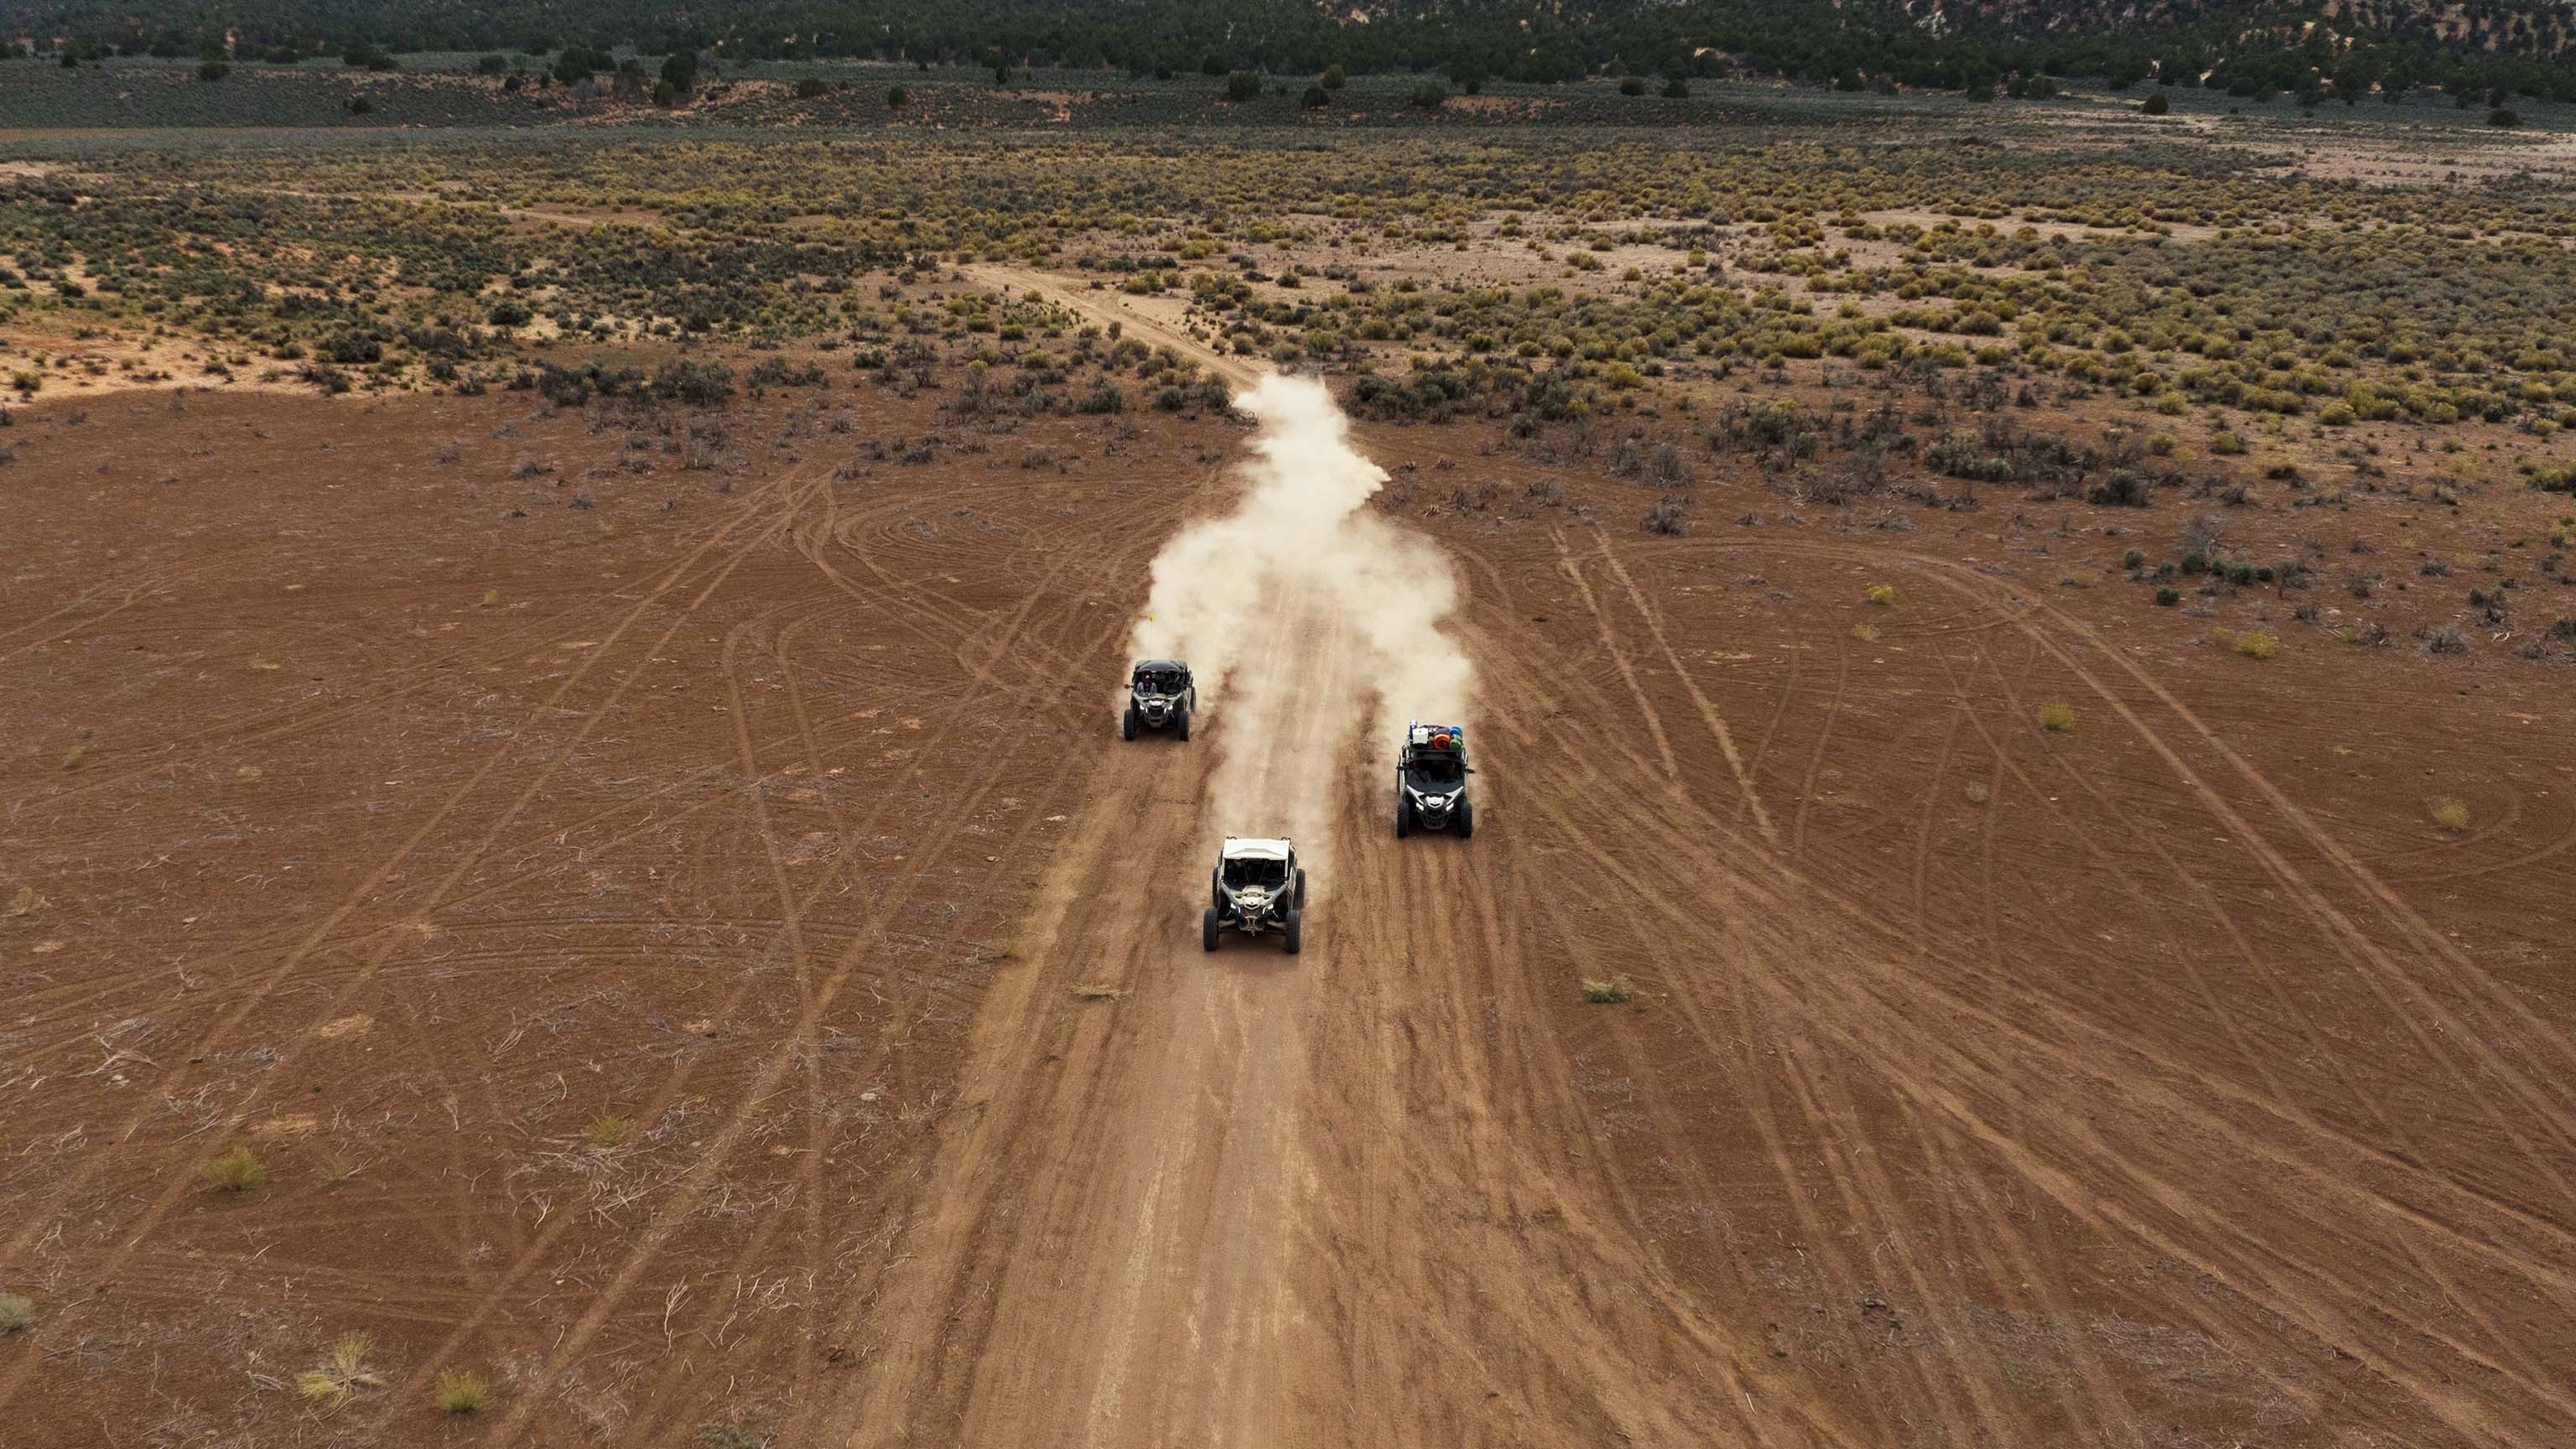 Flyfoto av tre Can-Am side-by-sides på en sti i et ørkenlandskap. 